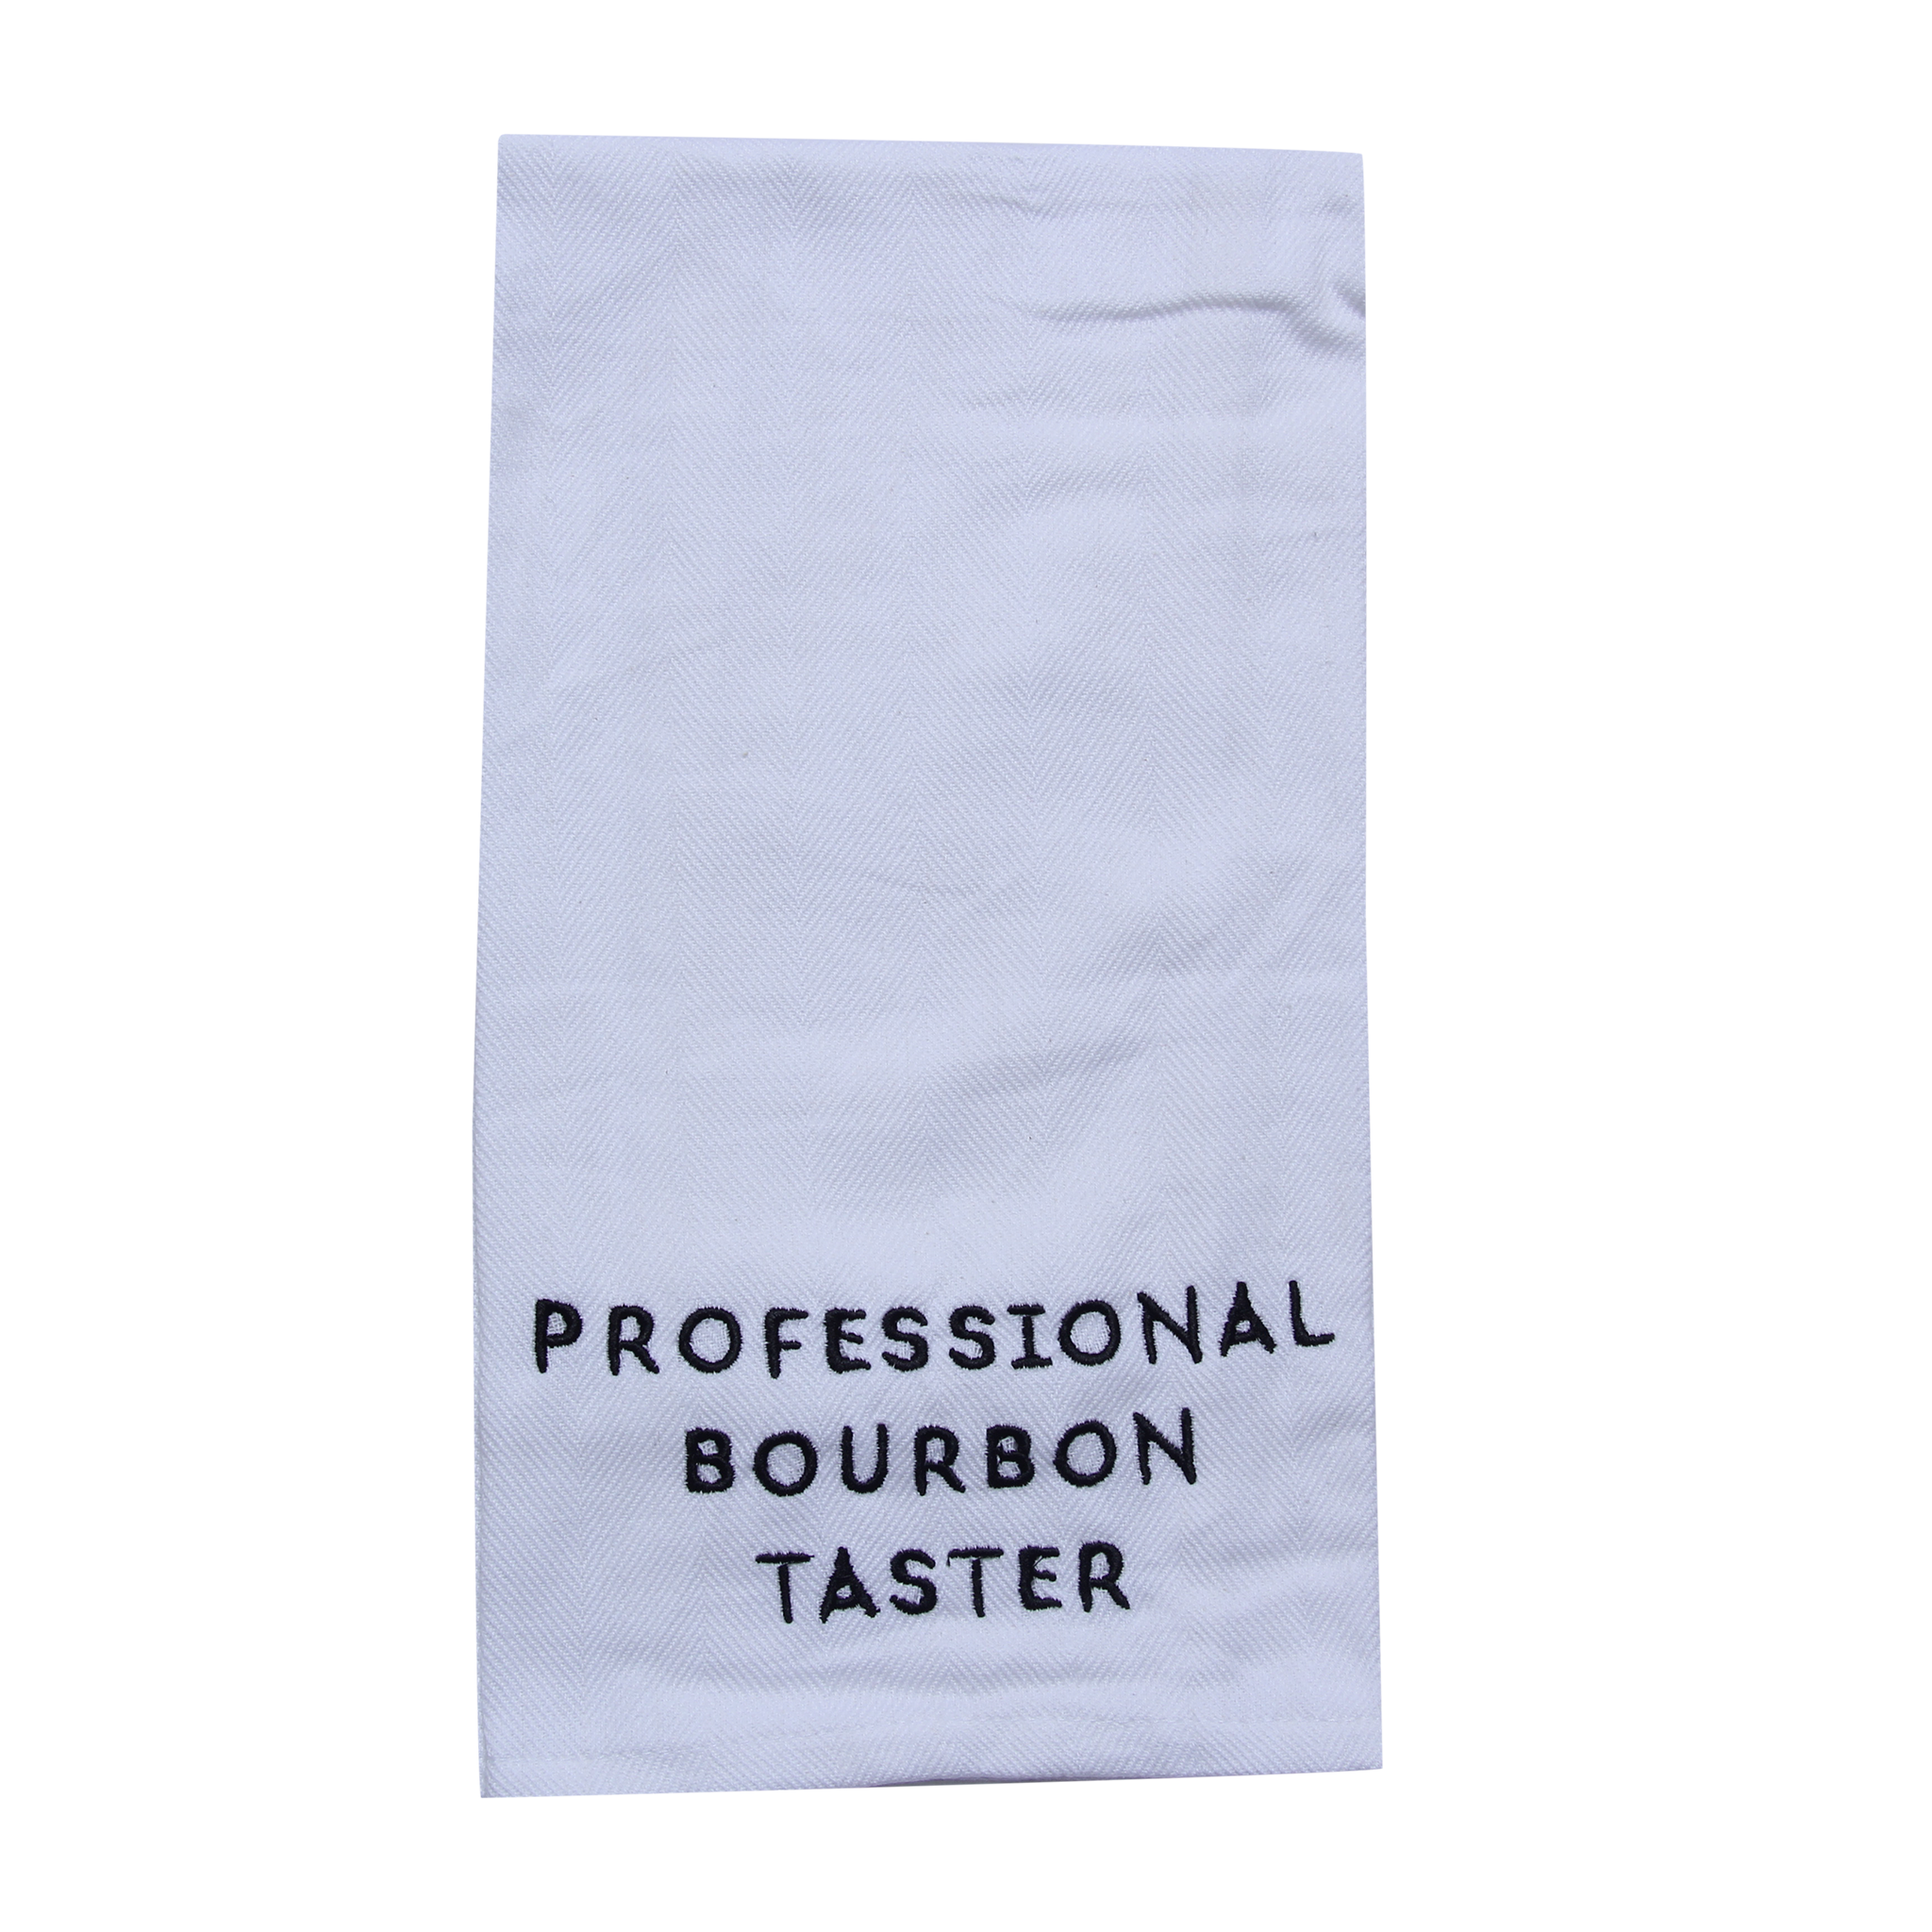 Professional Bourbon Taster Tea Towel - Barrel Down South